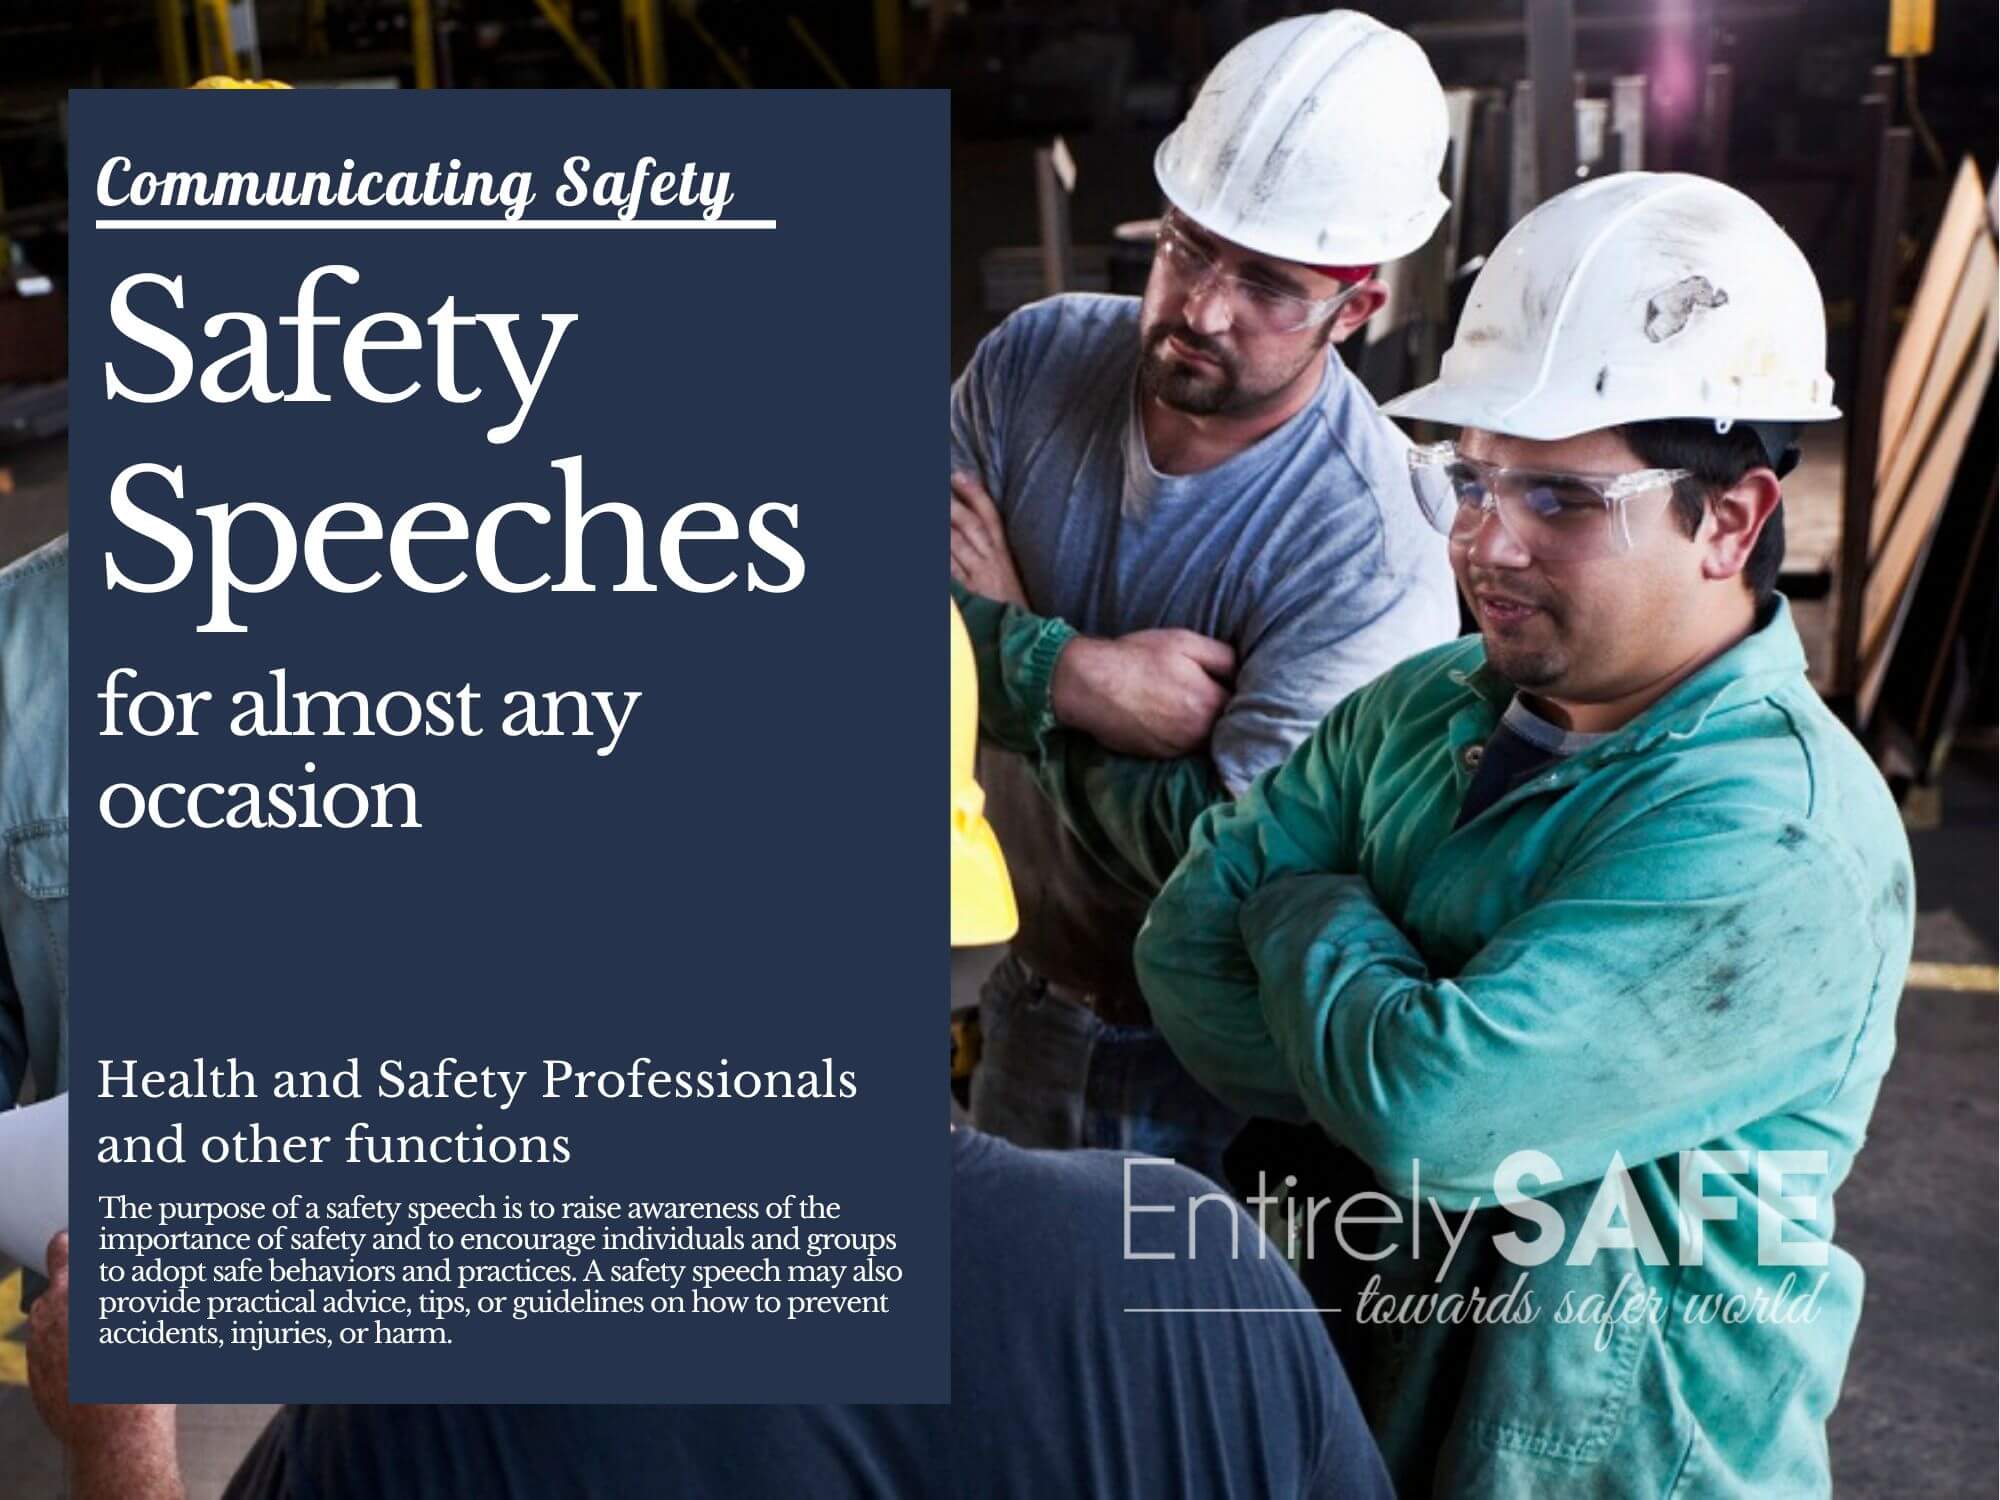 a speech about safety